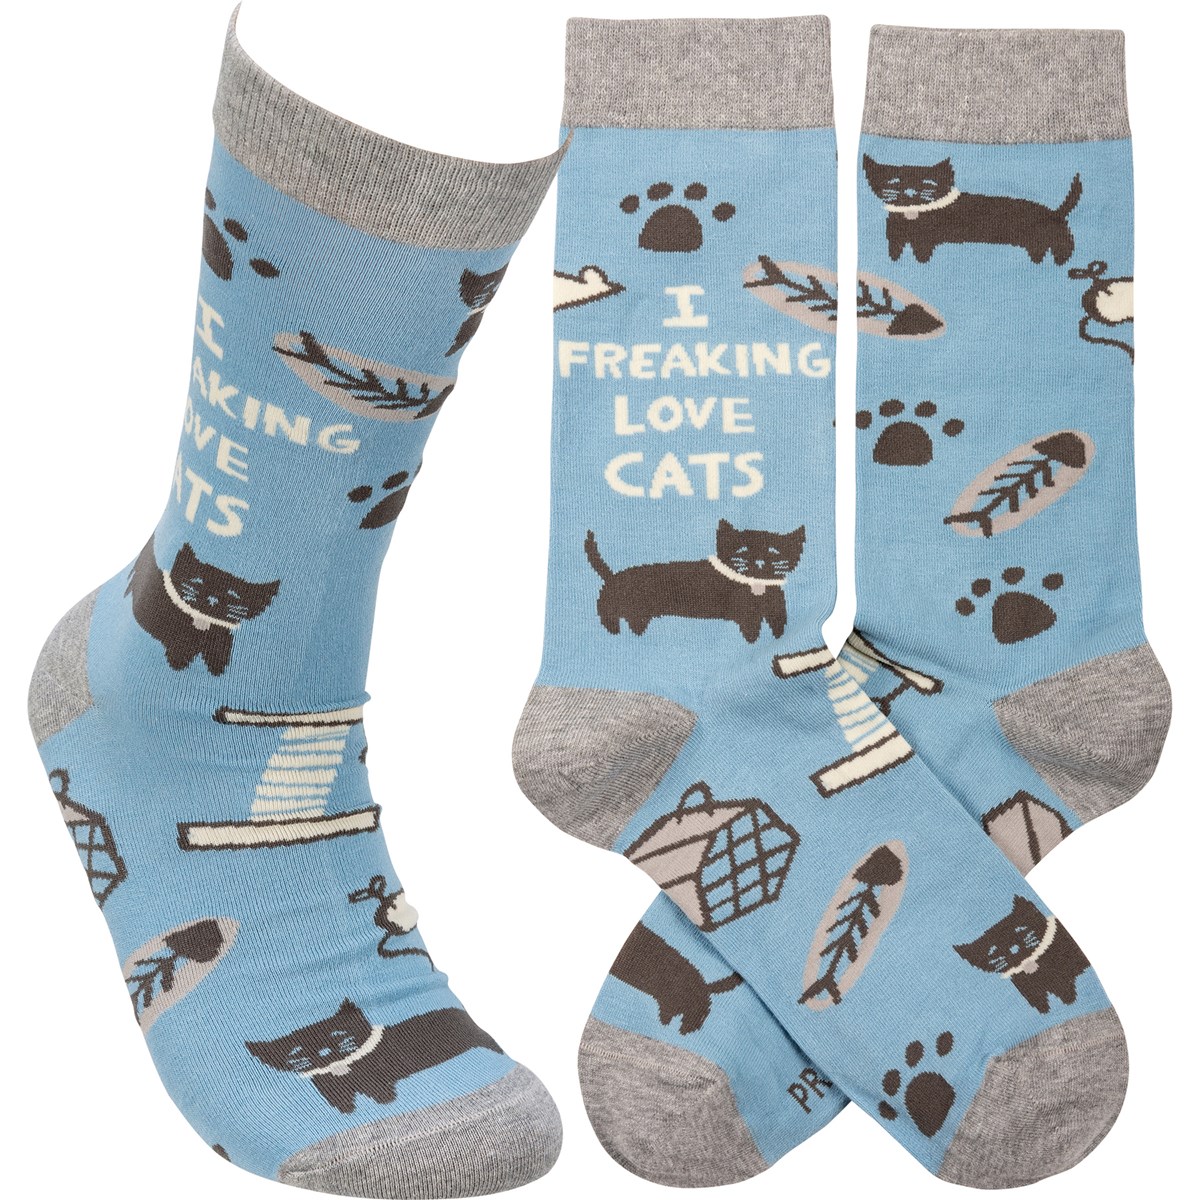 I Freaking Love Cats Socks - Cotton, Nylon, Spandex